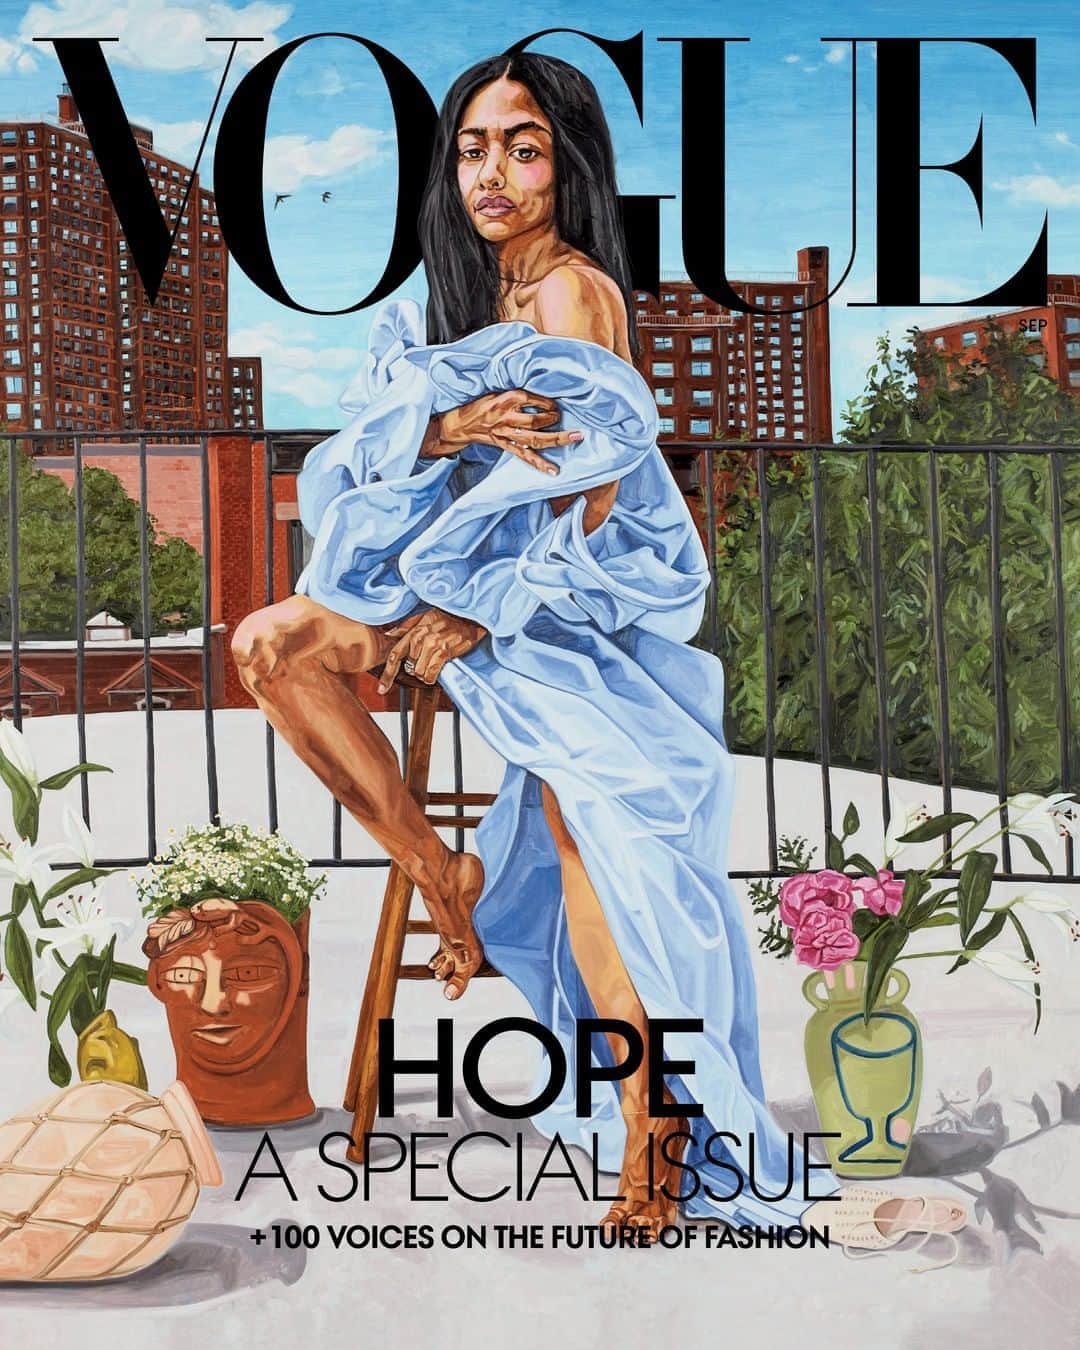 Vogueのインスタグラム